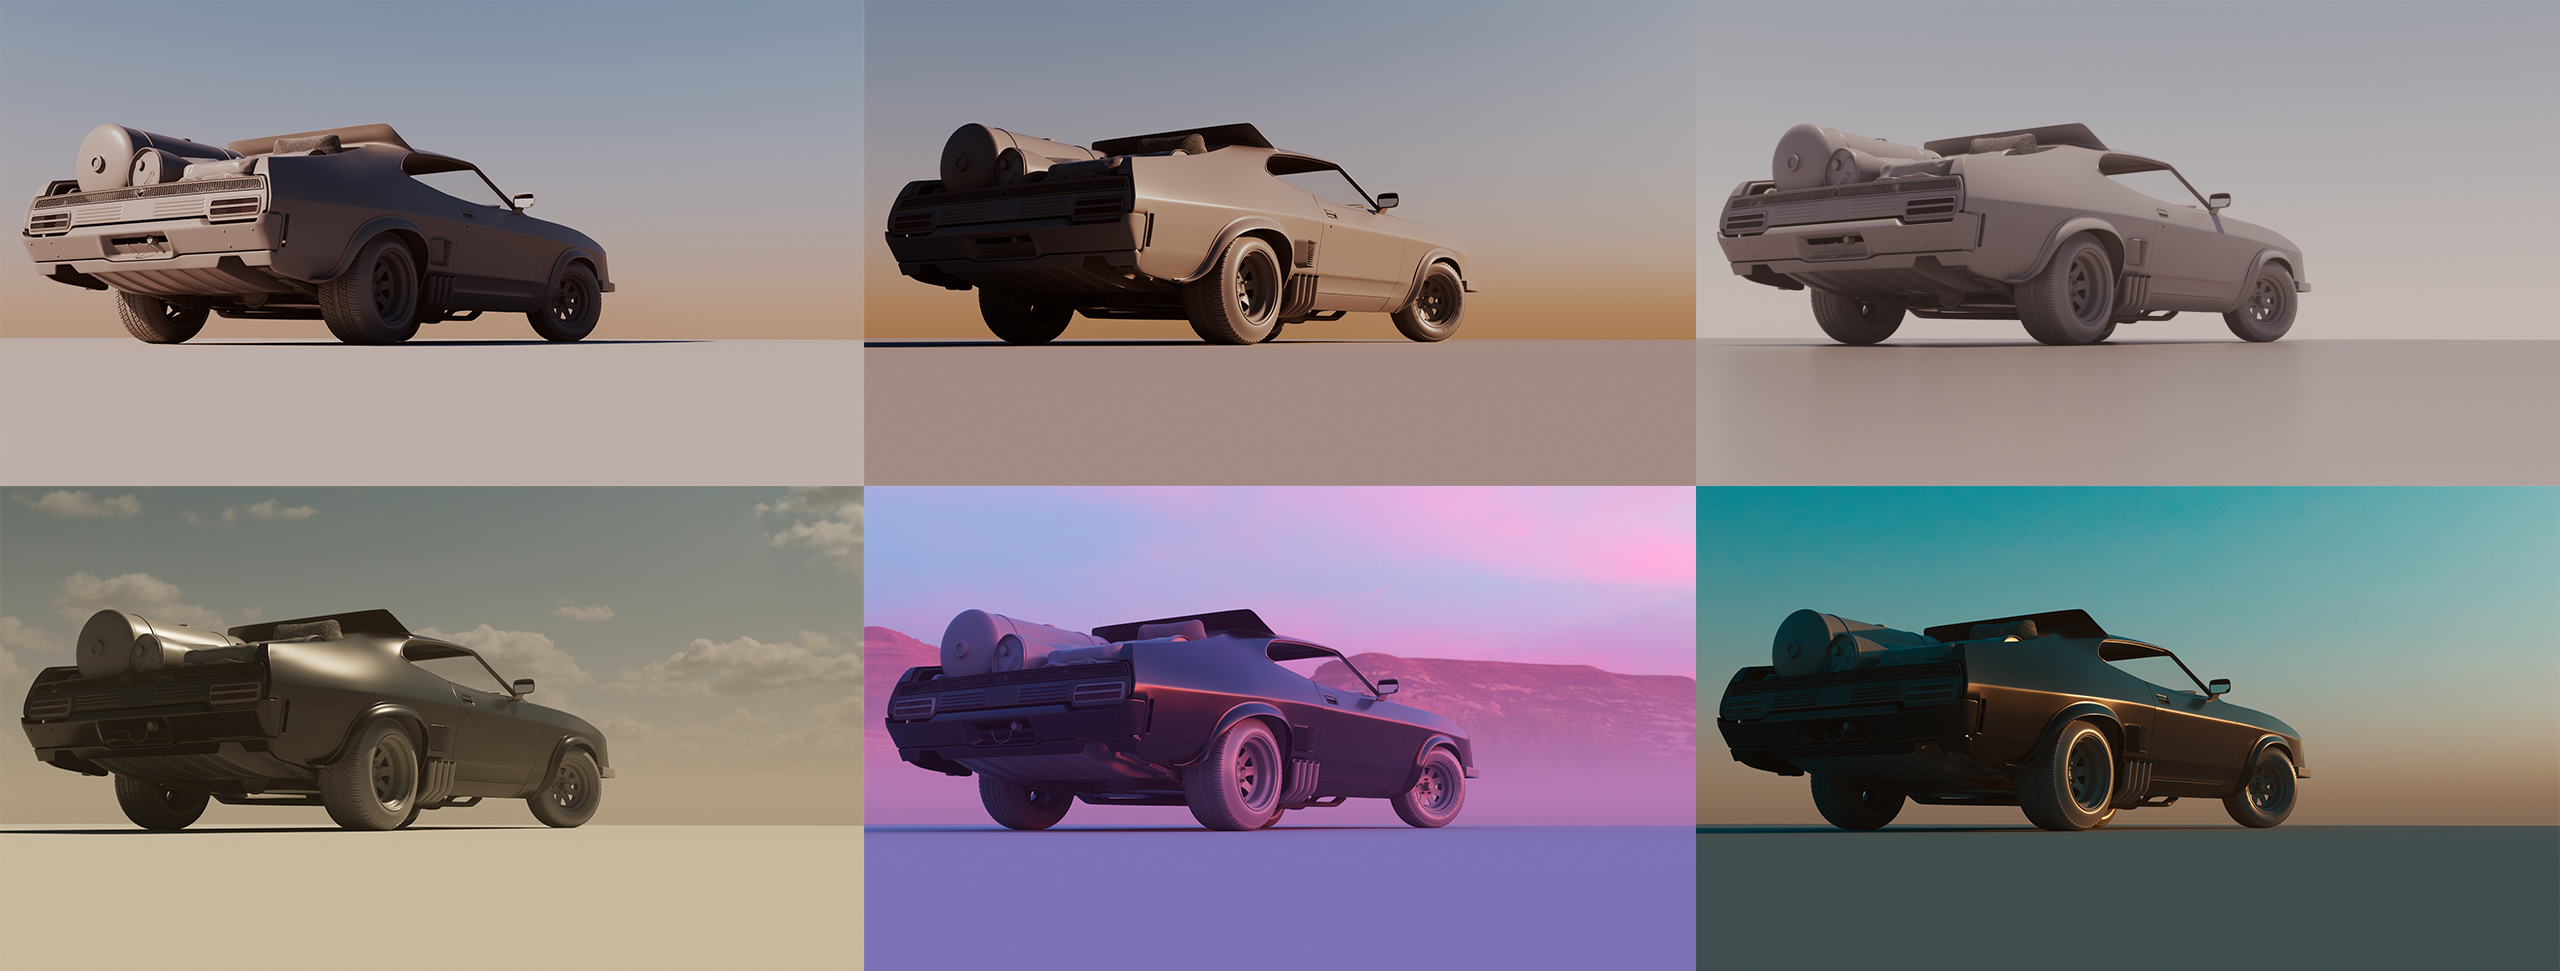 Interceptor Mad Max Fury Road - Car Render Challenge 2020